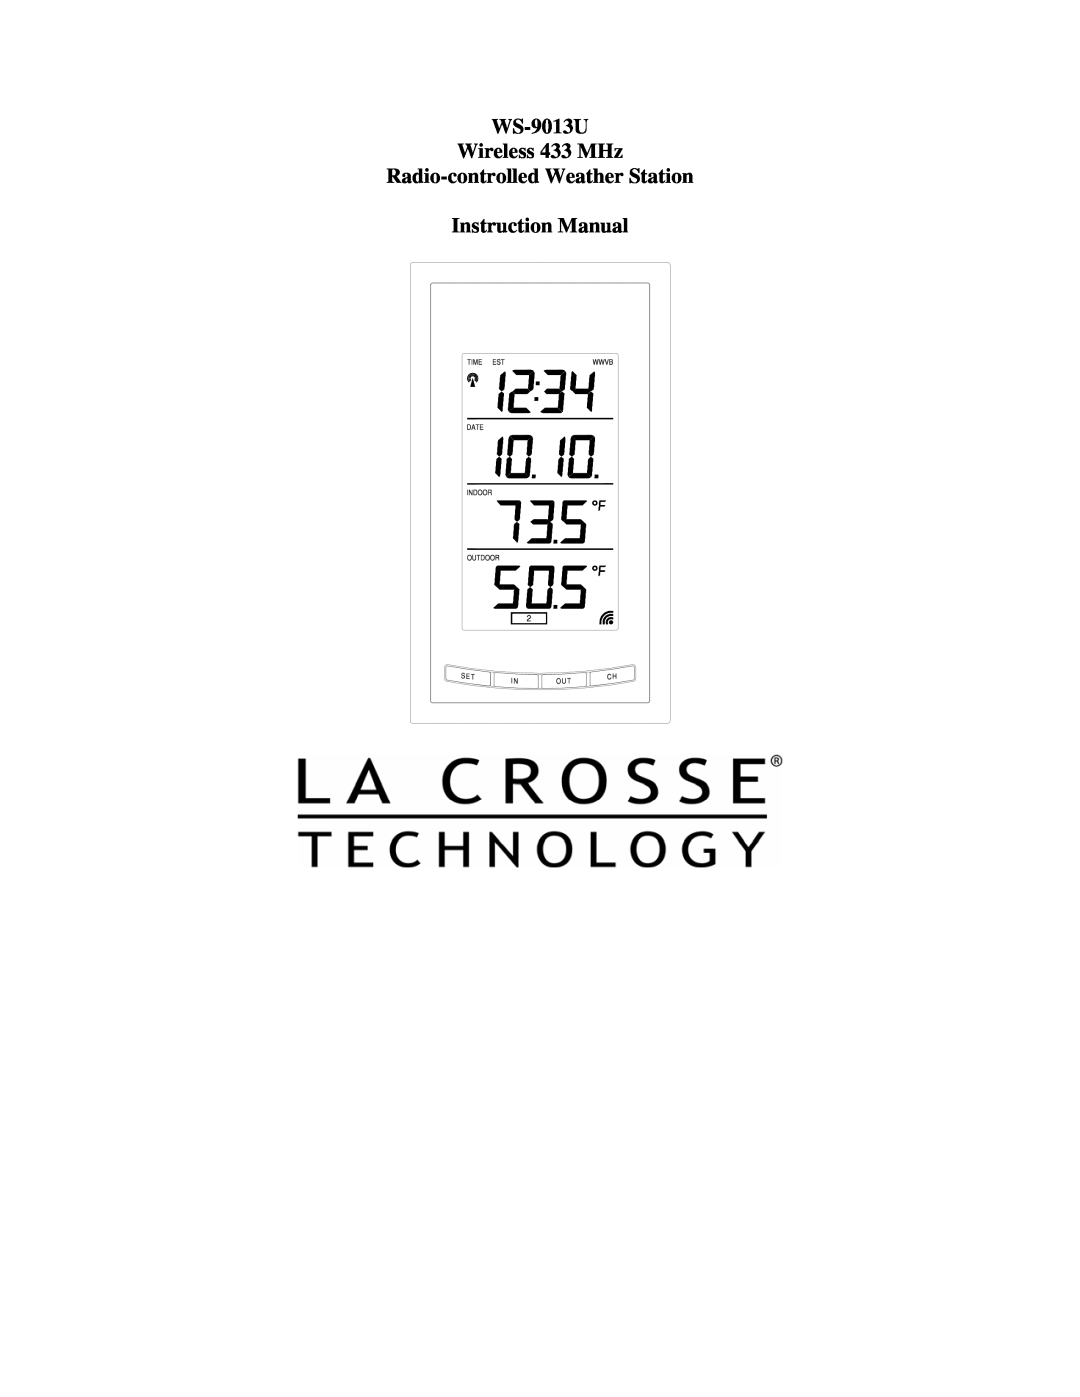 La Crosse Technology instruction manual WS-9013U Wireless 433 MHz Radio-controlled Weather Station 